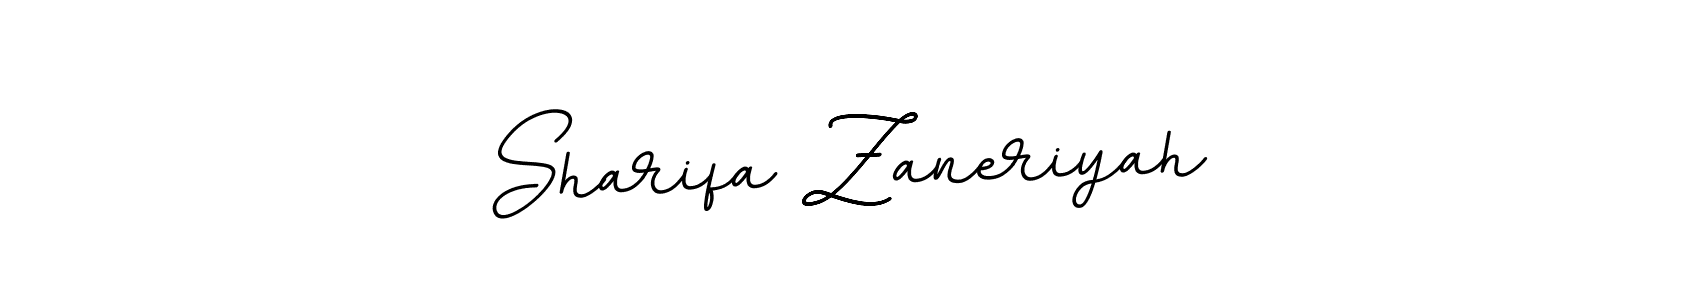 How to Draw Sharifa Zaneriyah signature style? BallpointsItalic-DORy9 is a latest design signature styles for name Sharifa Zaneriyah. Sharifa Zaneriyah signature style 11 images and pictures png